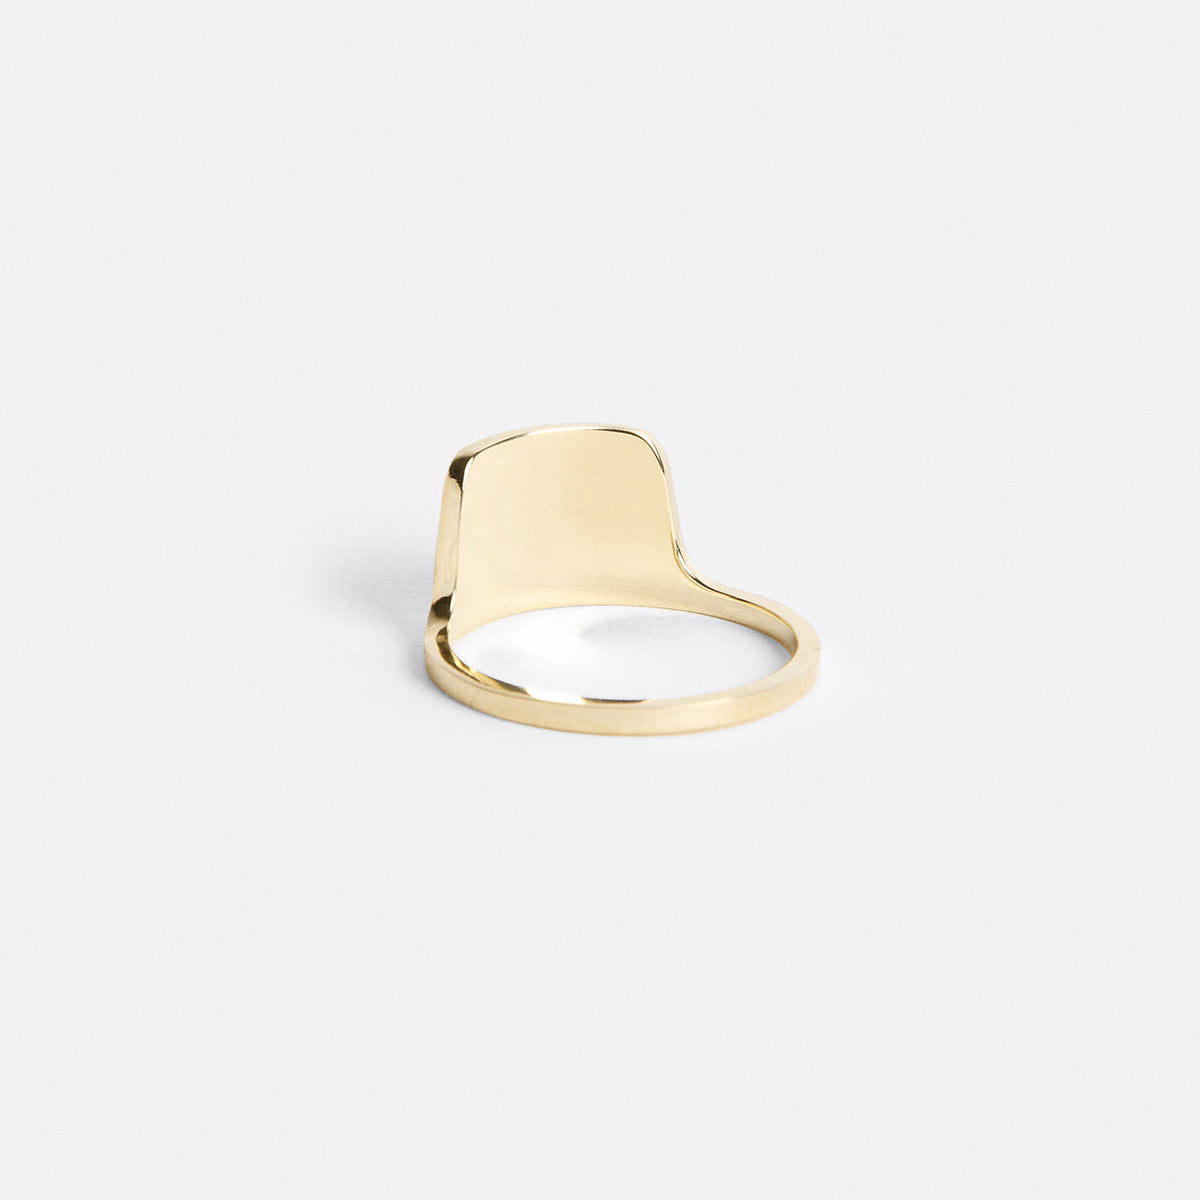 Tyla Handmade Ring in 14k Gold by SHW Fine Jewelry in New York City